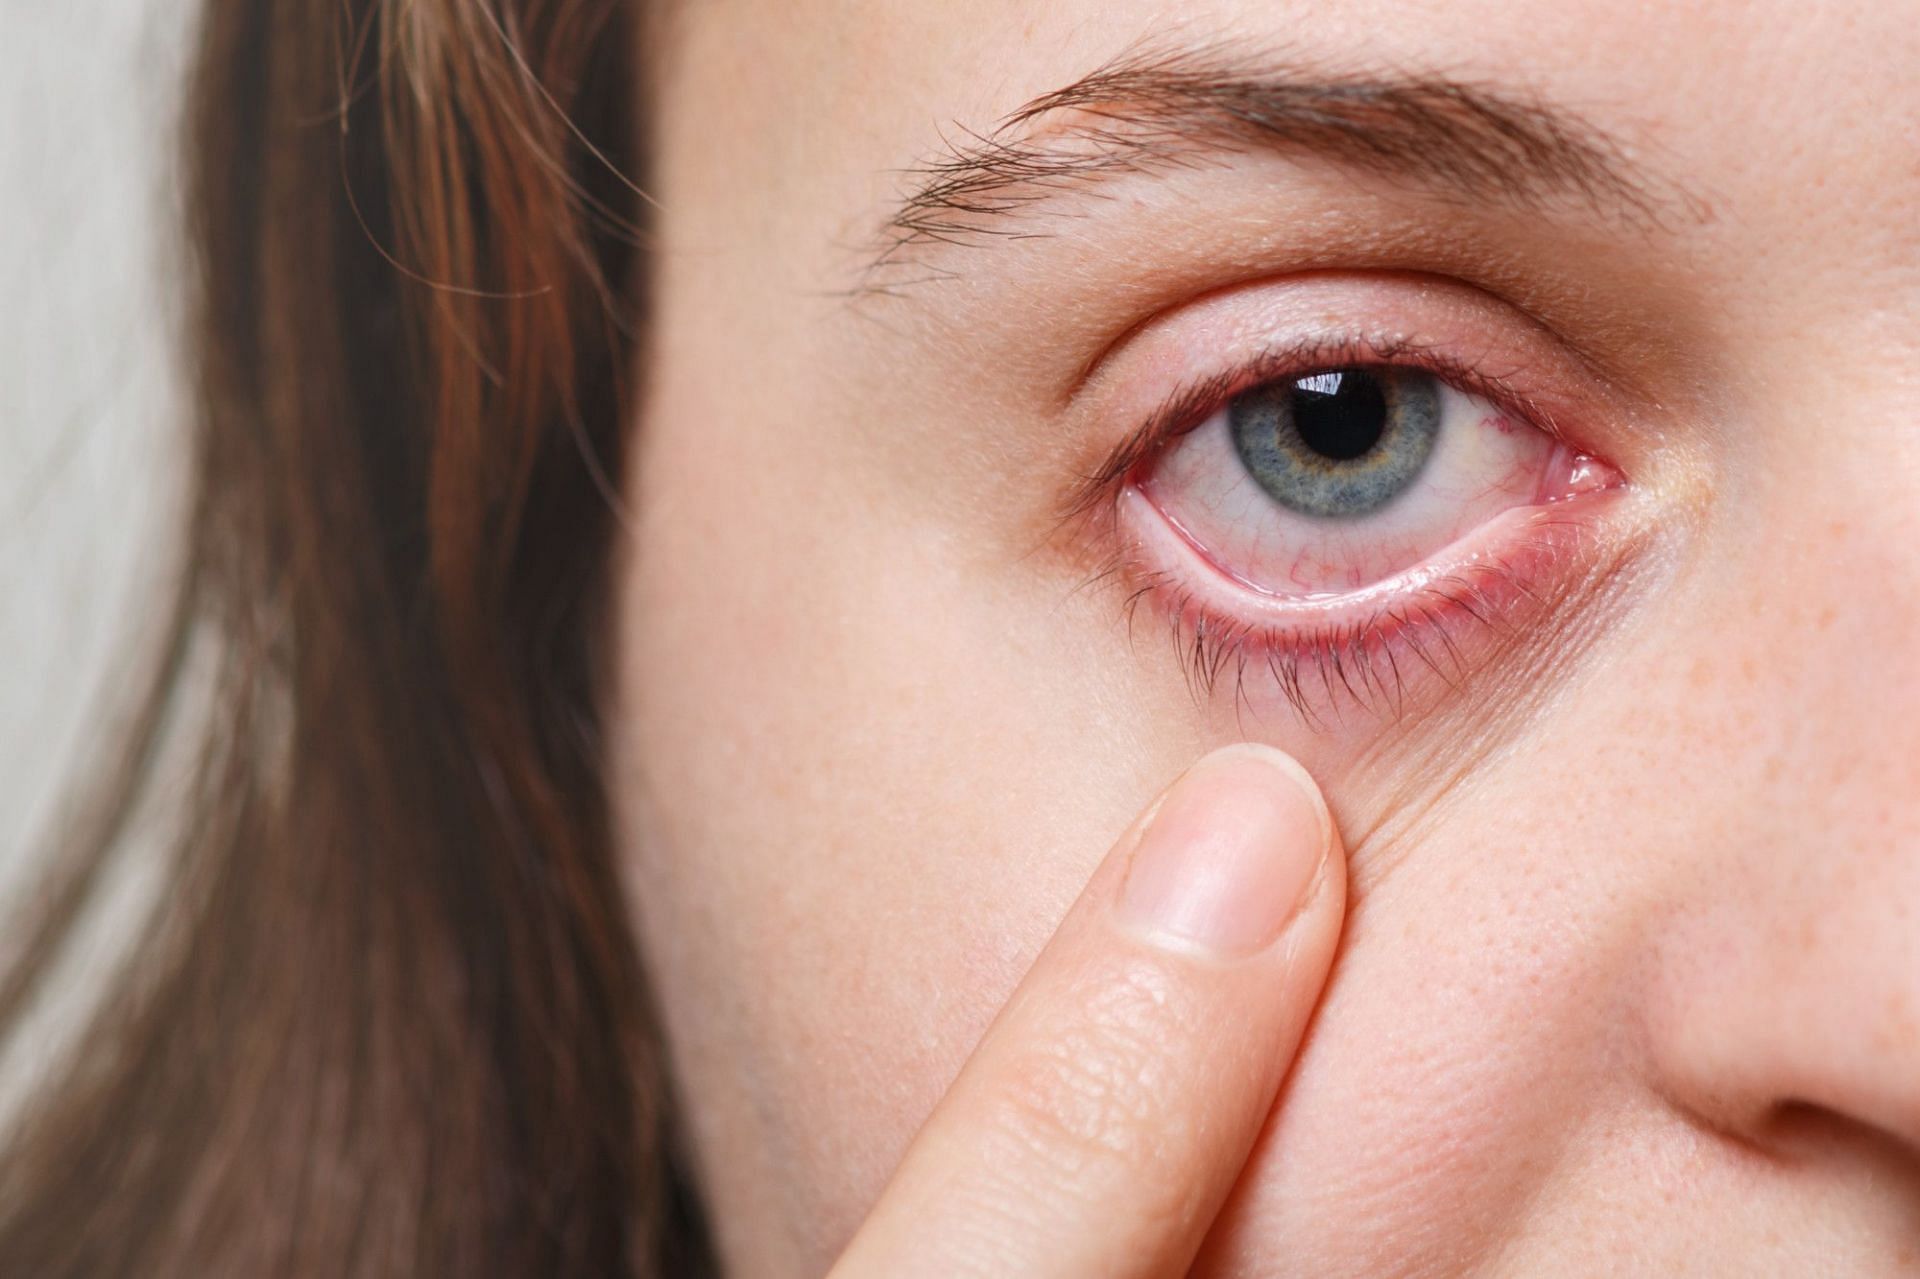 Symptoms of subconjunctival hemorrhage includes blood in eye. (Photo via Freepik)